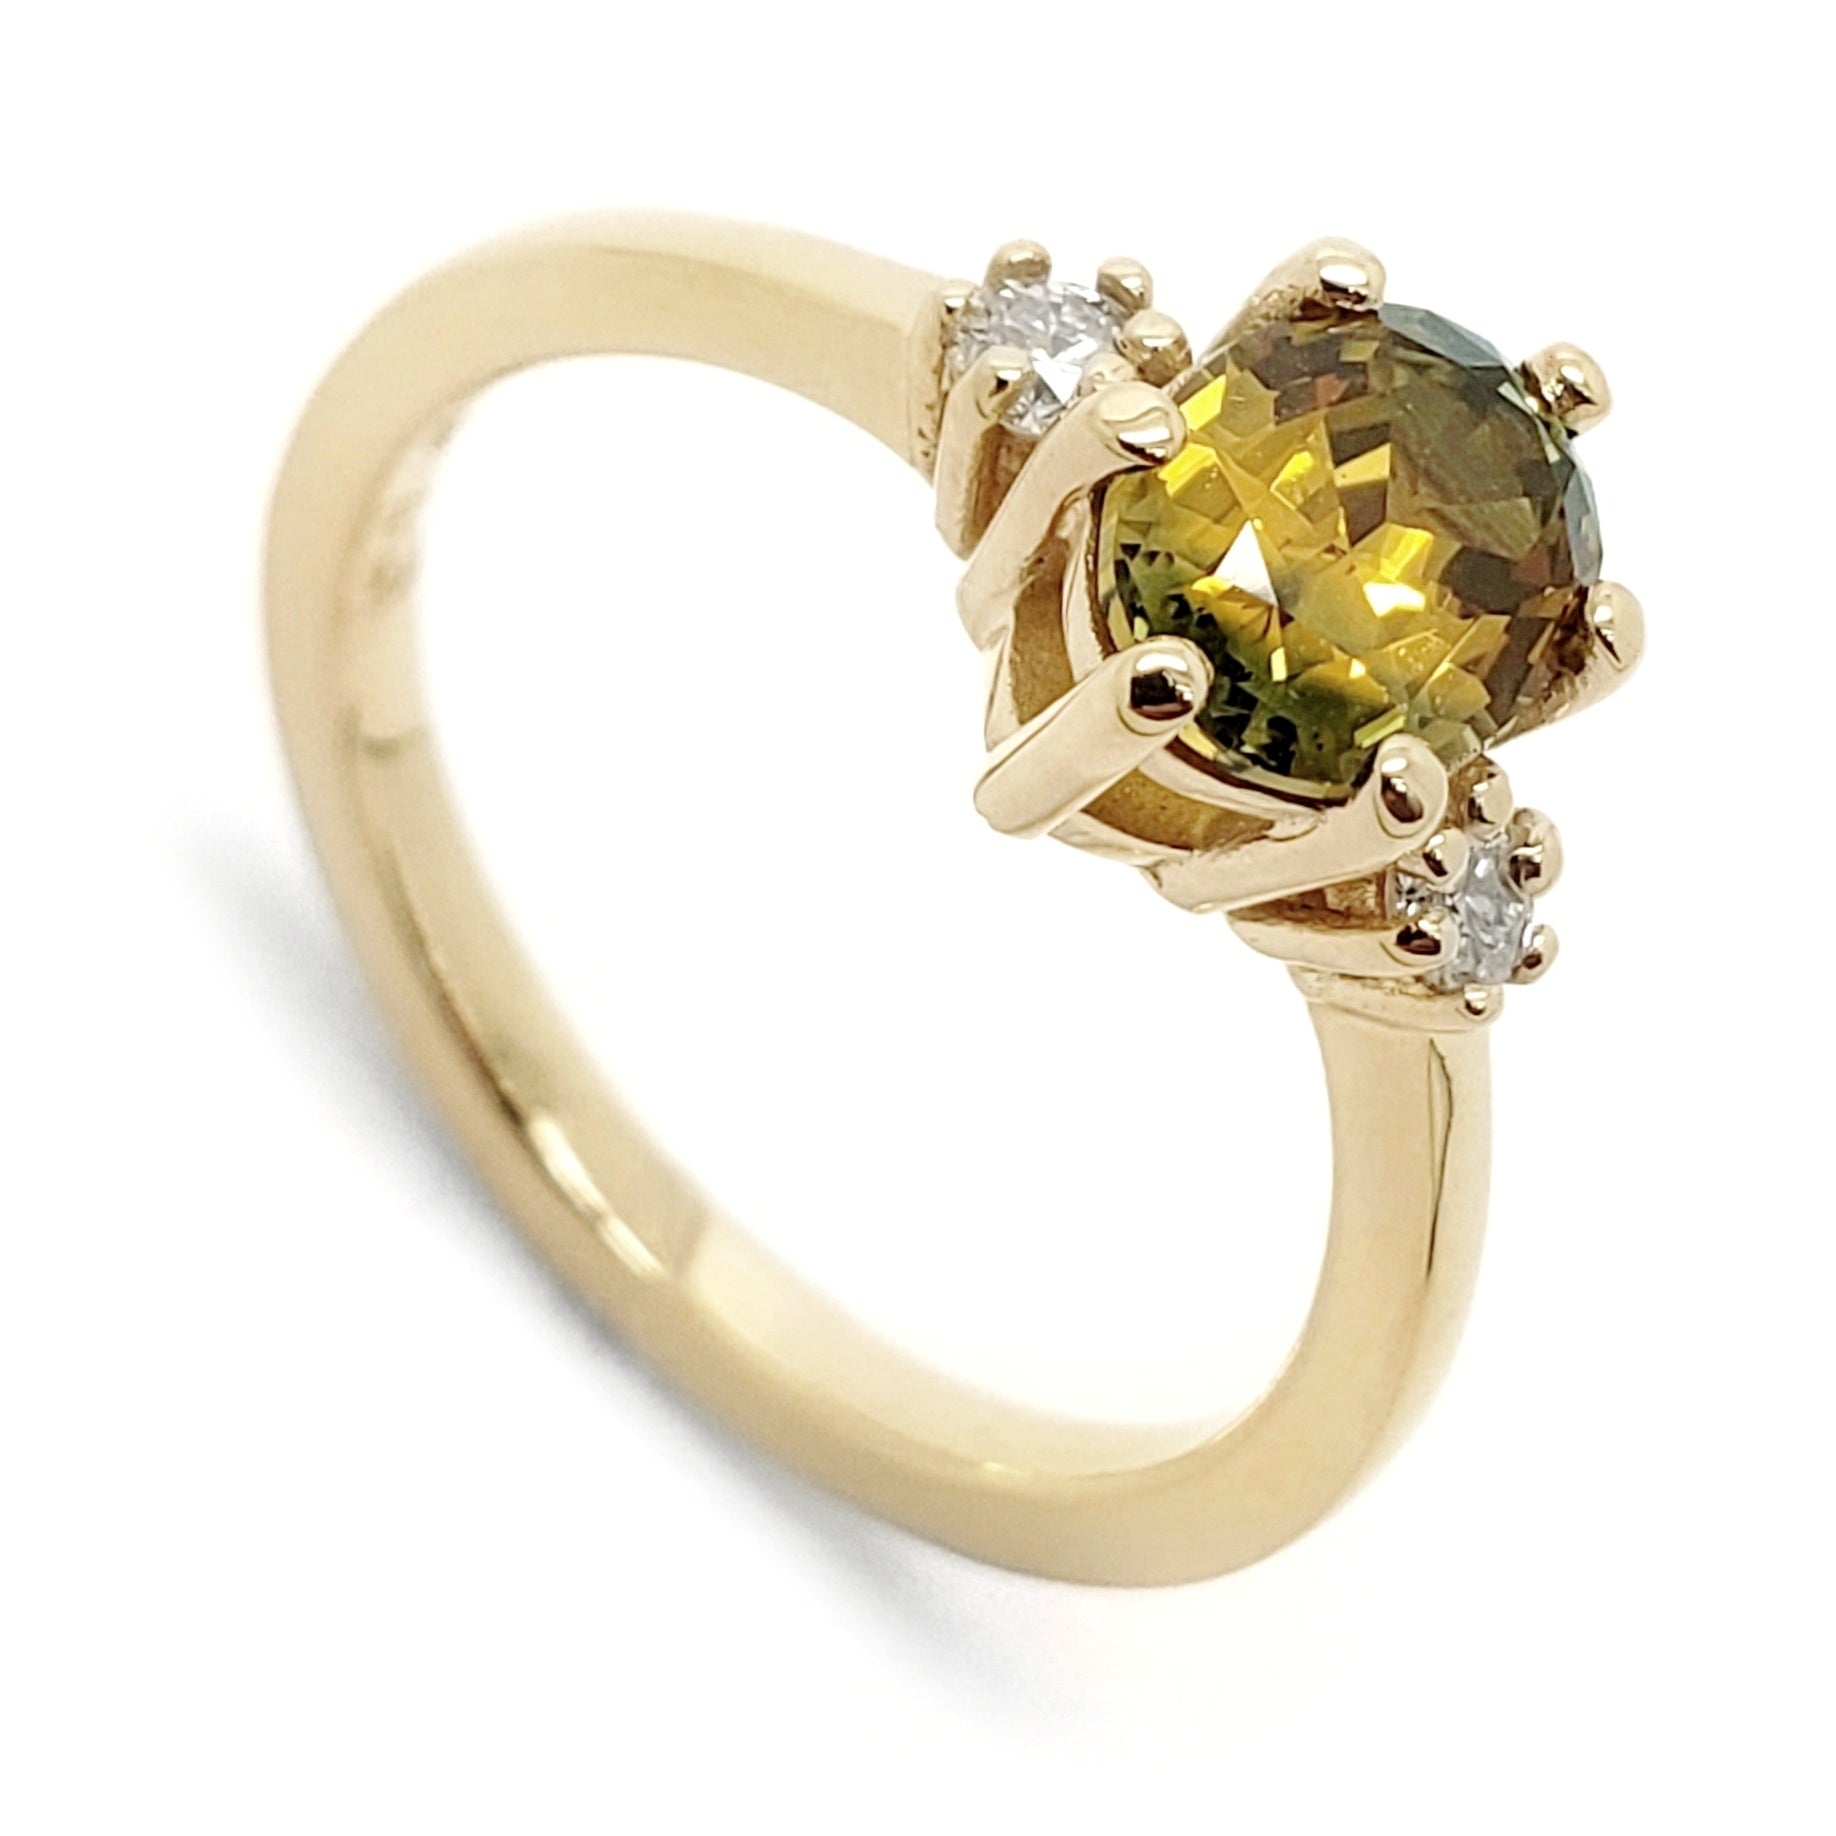 Madagascar Sapphire Engagement Ring | Era Design Vancouver Canada